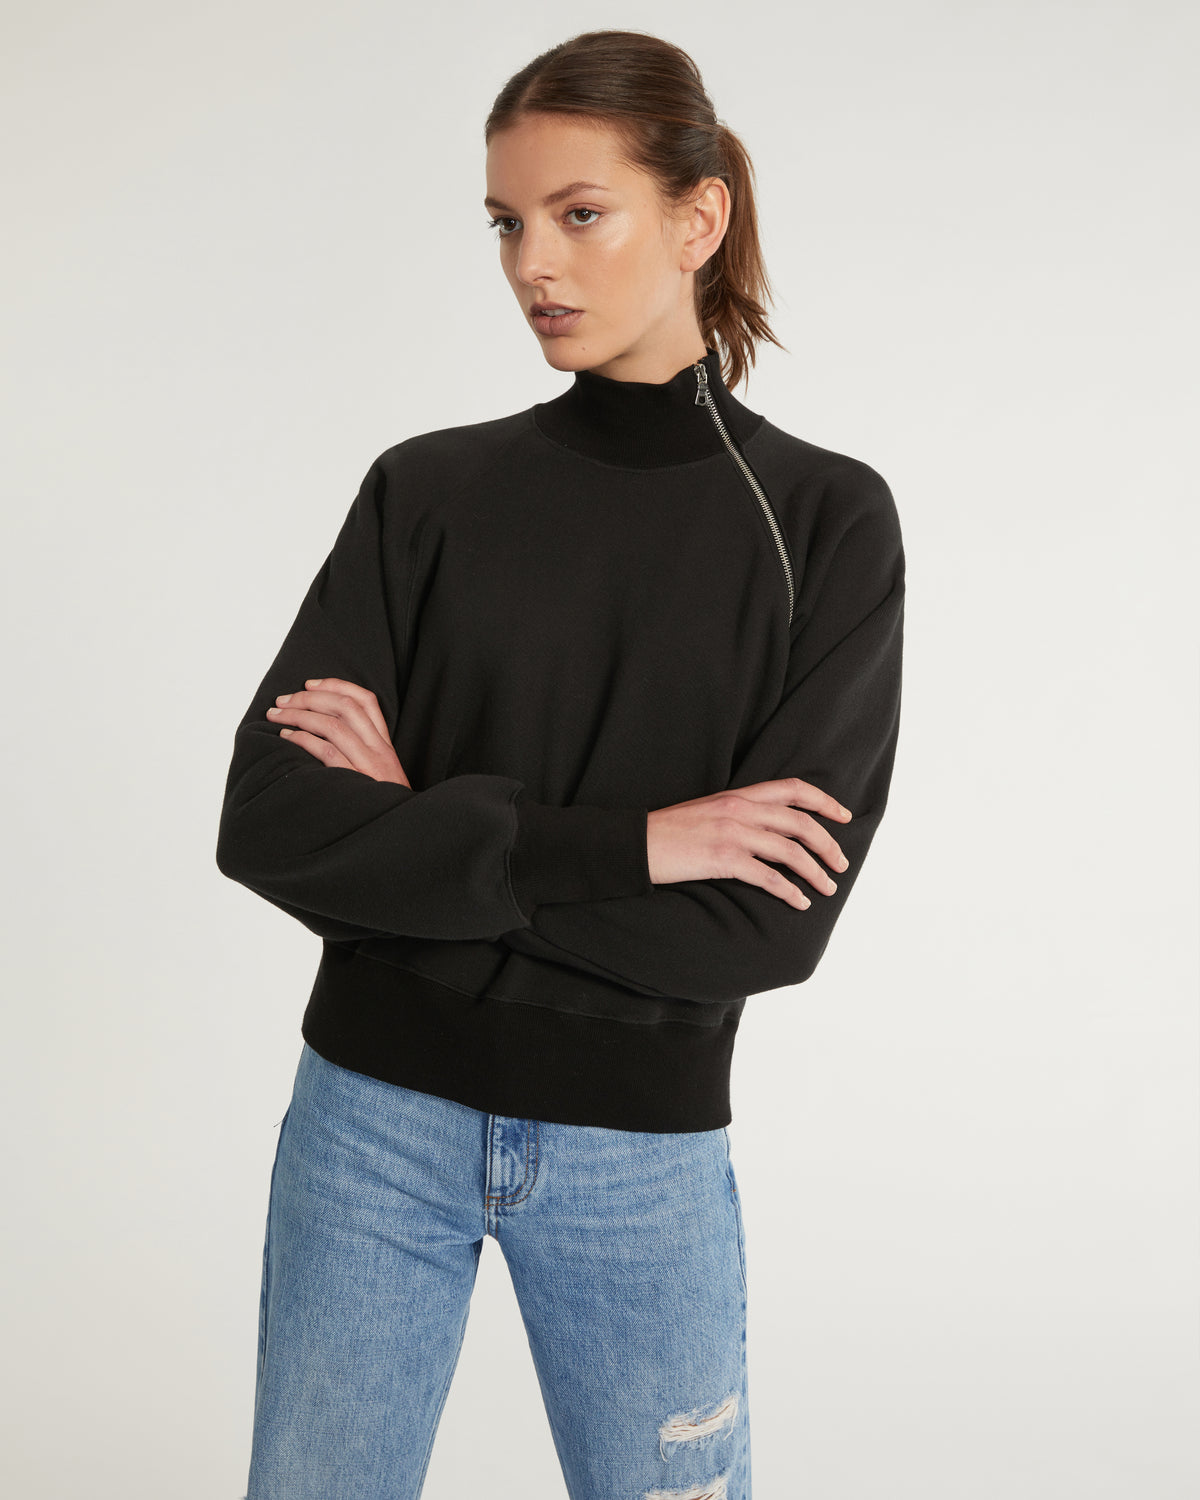 So Uptight French Terry Funnel Neck Zip Sweatshirt in Black